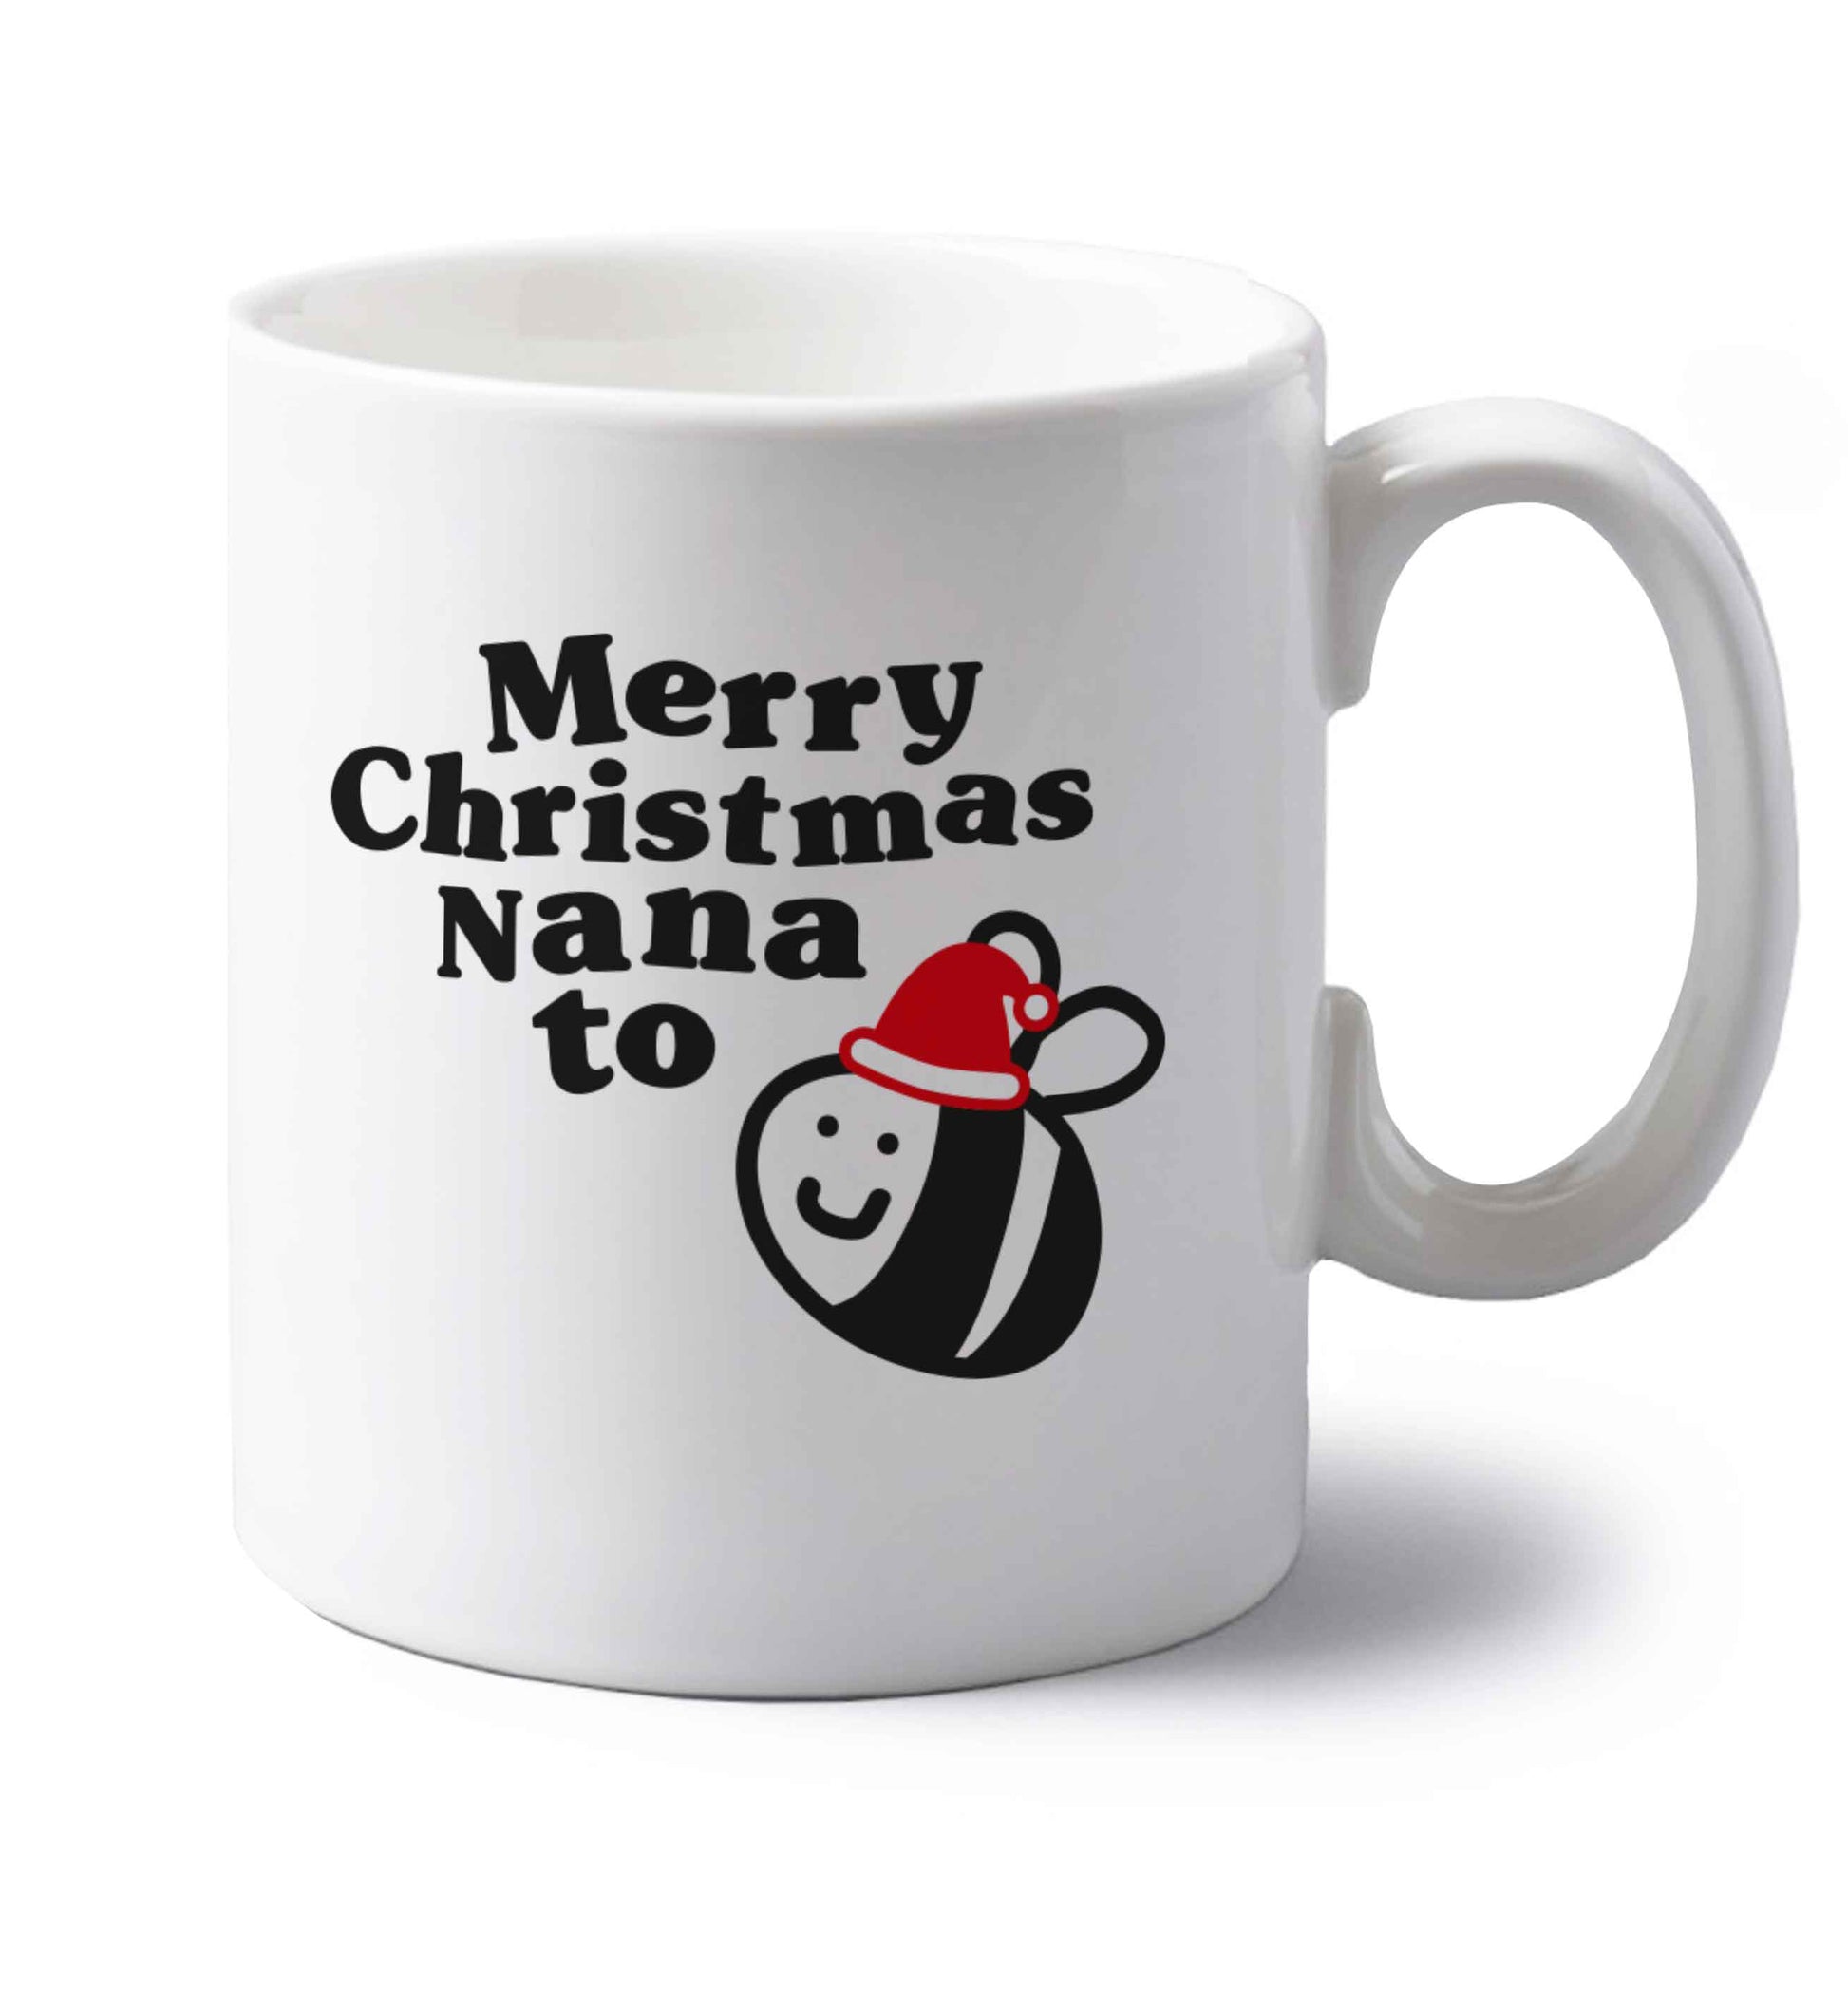 Merry Christmas nana to be left handed white ceramic mug 